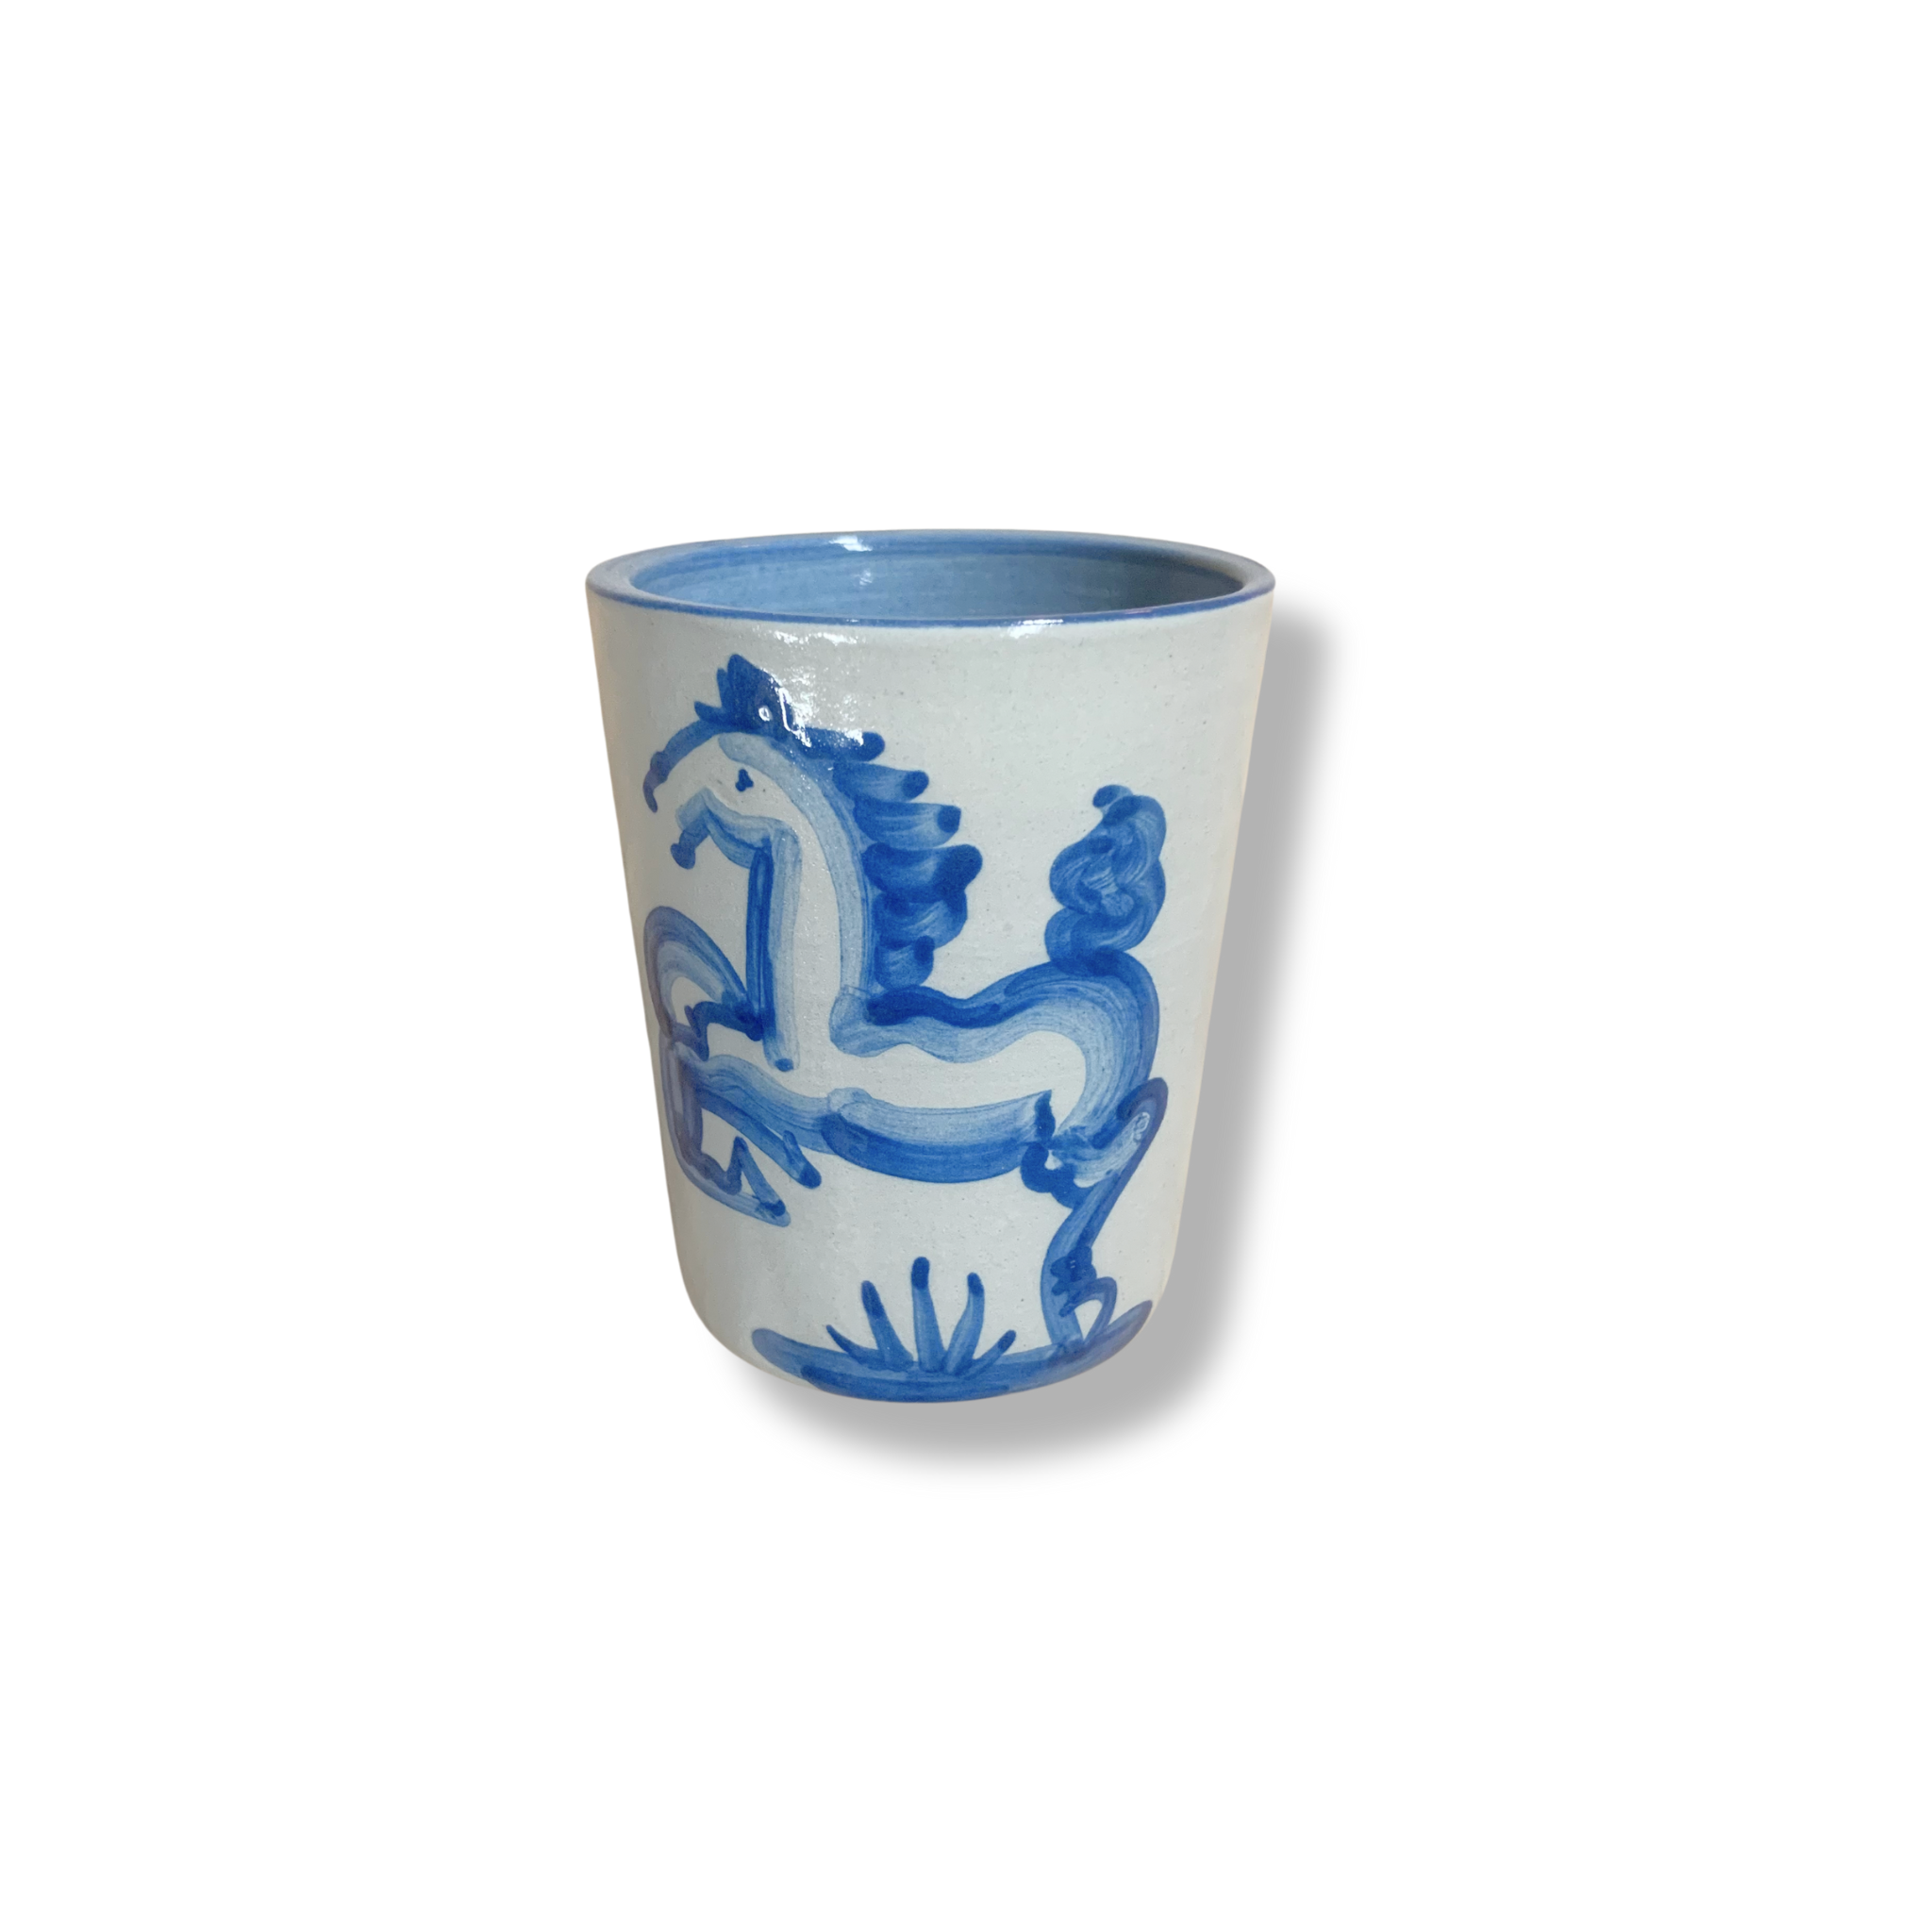 Julep Cup - Blue Horse